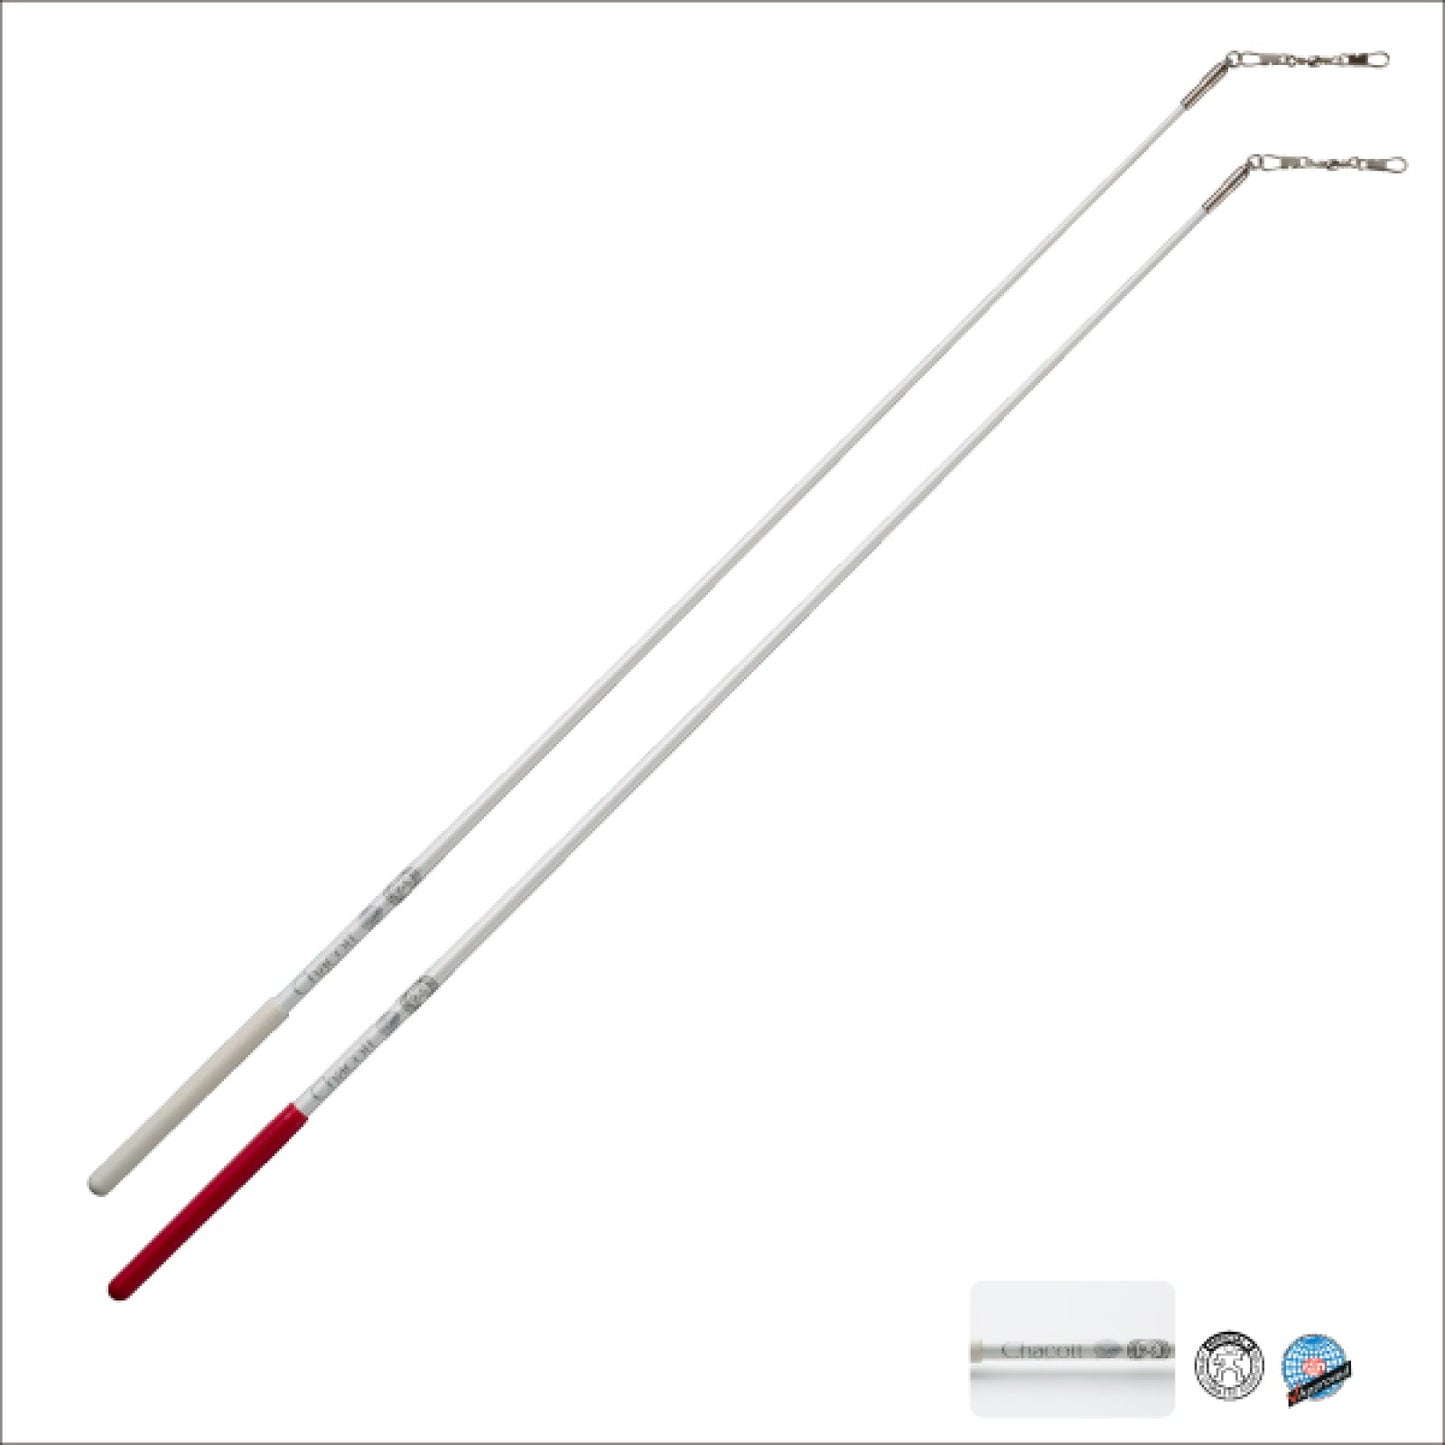 Bandpinne glasfiber, 60 cm - FIG, Chacott